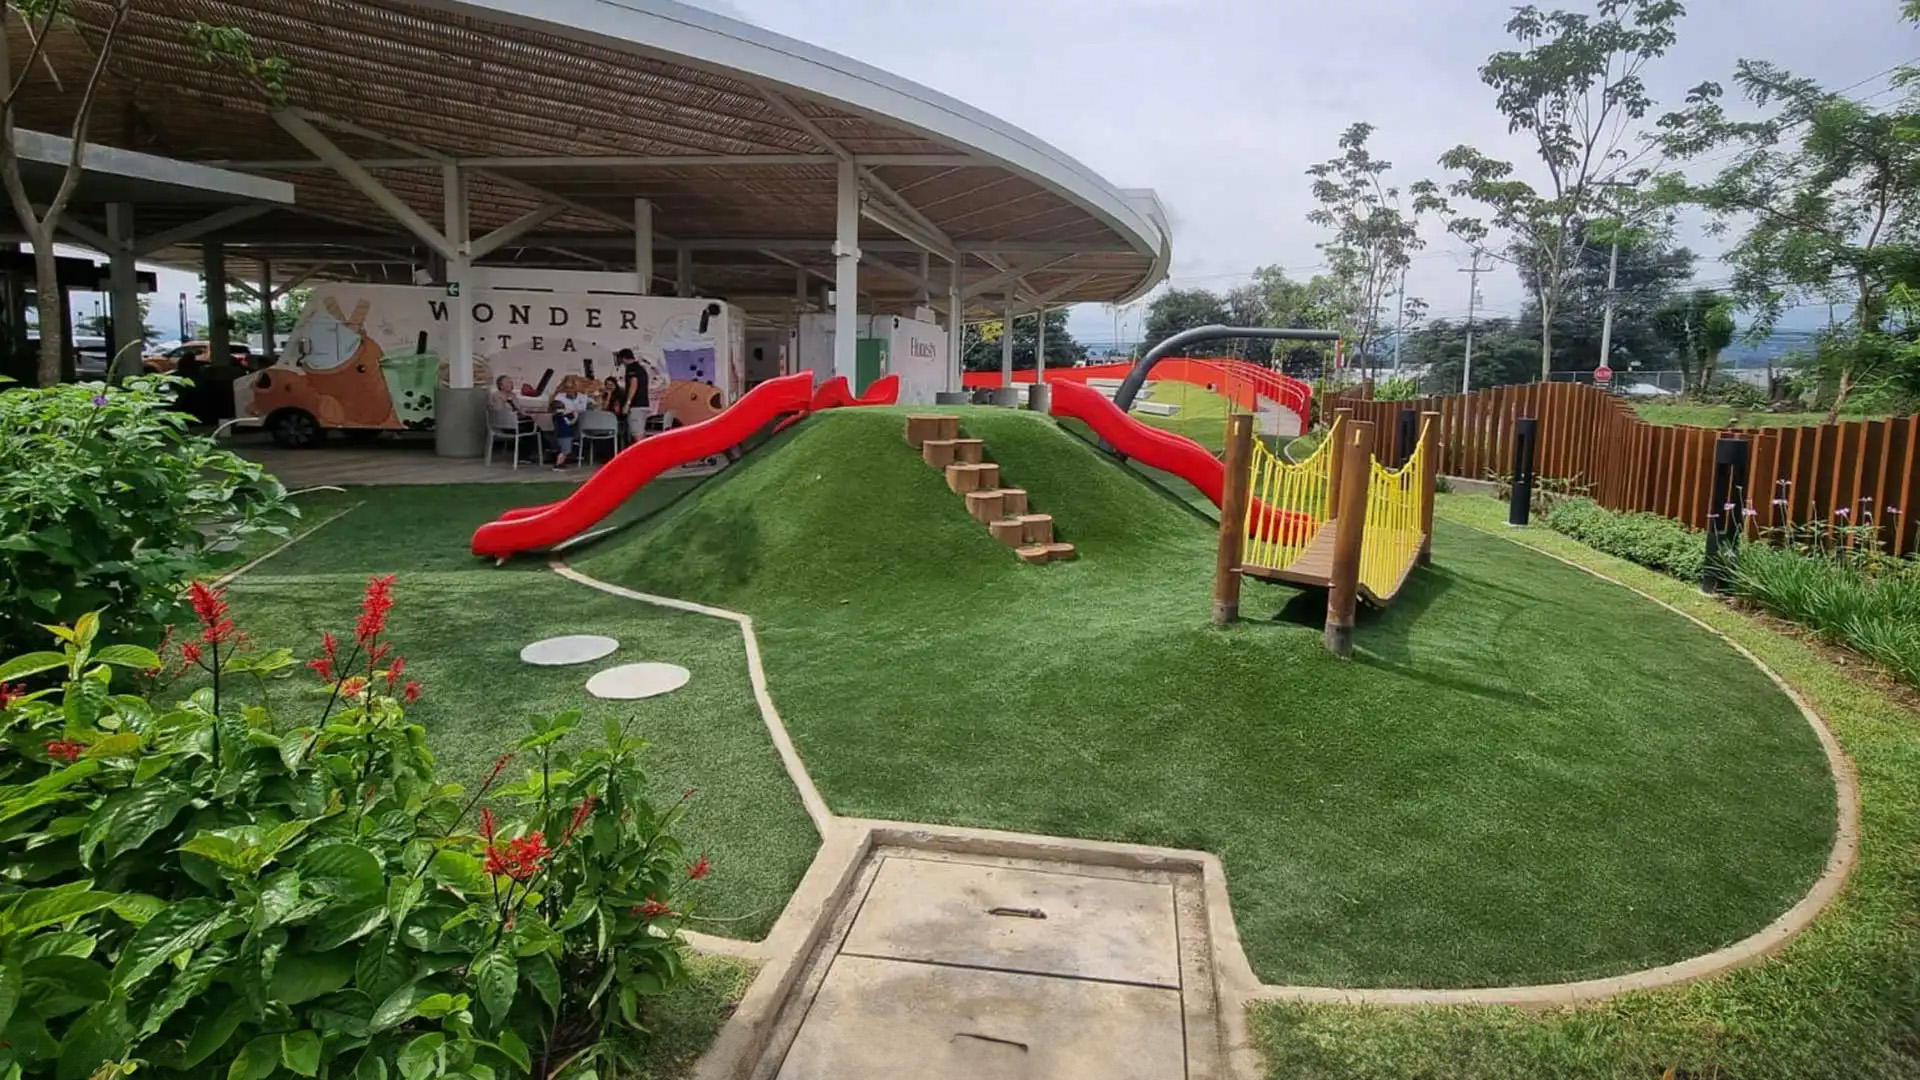 Cityzens Costa Rica Transforms Run-Down Area into Kid-Safe Playground